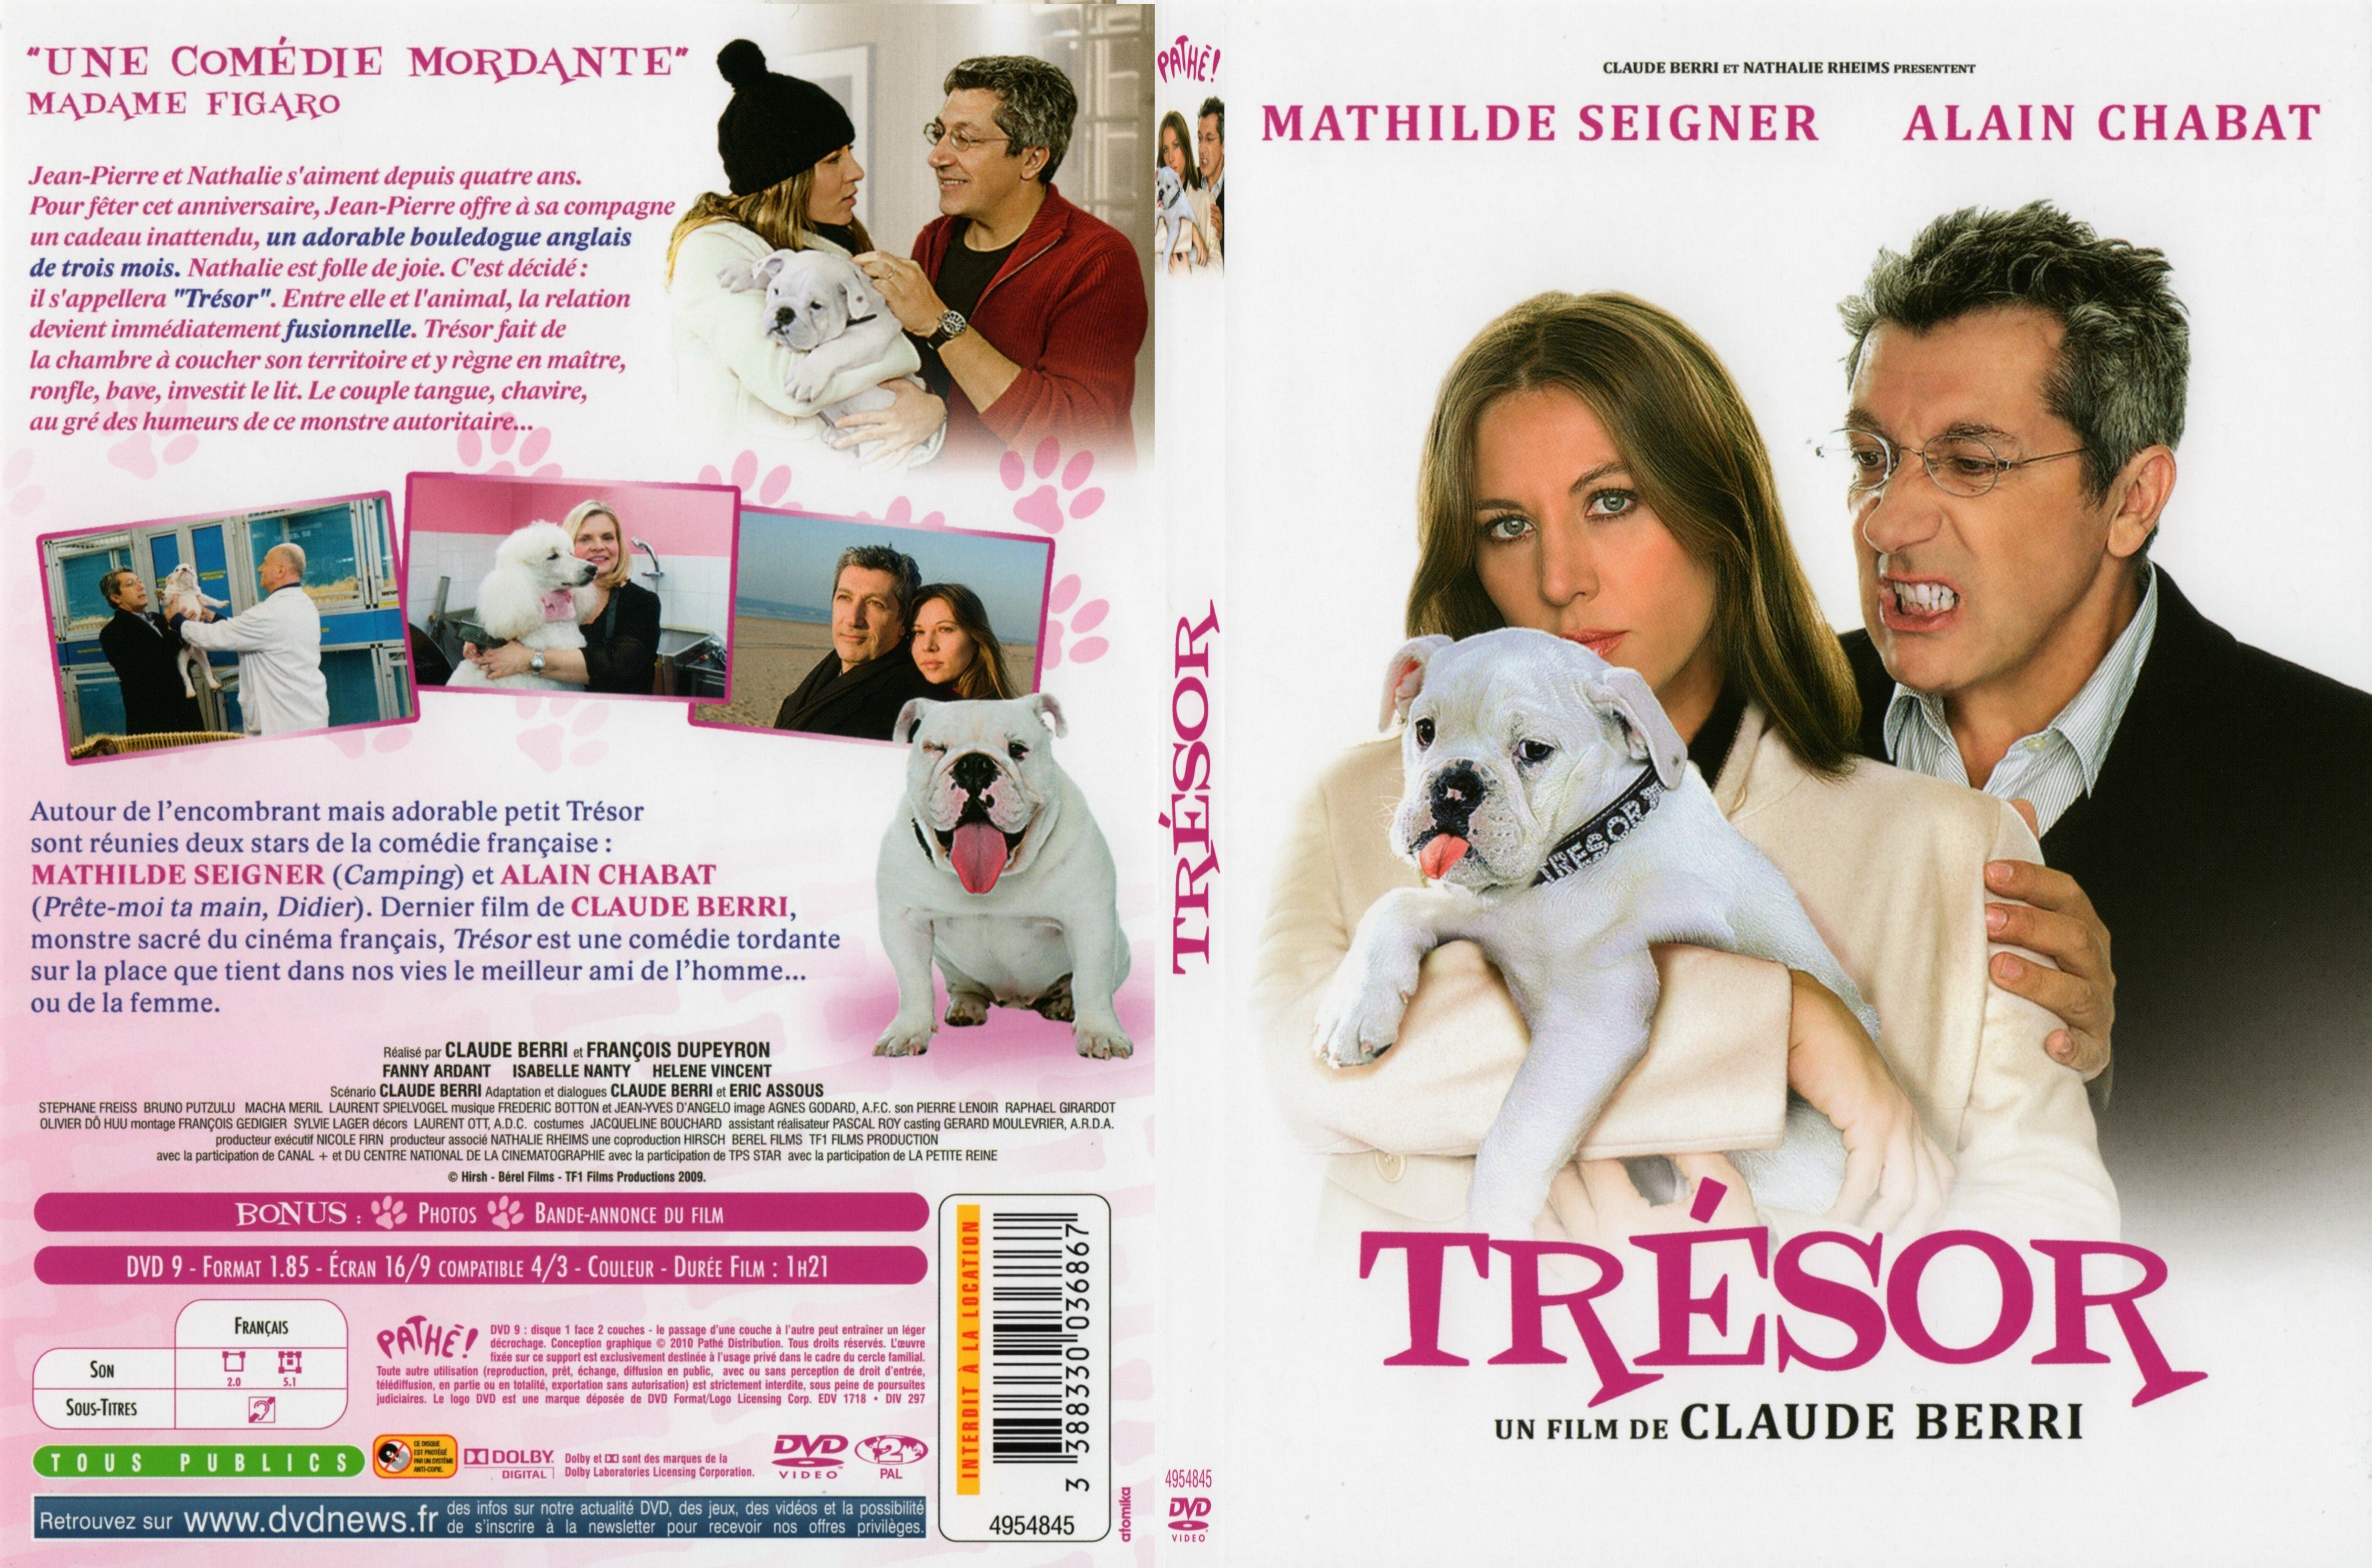 Jaquette DVD Tresor - SLIM